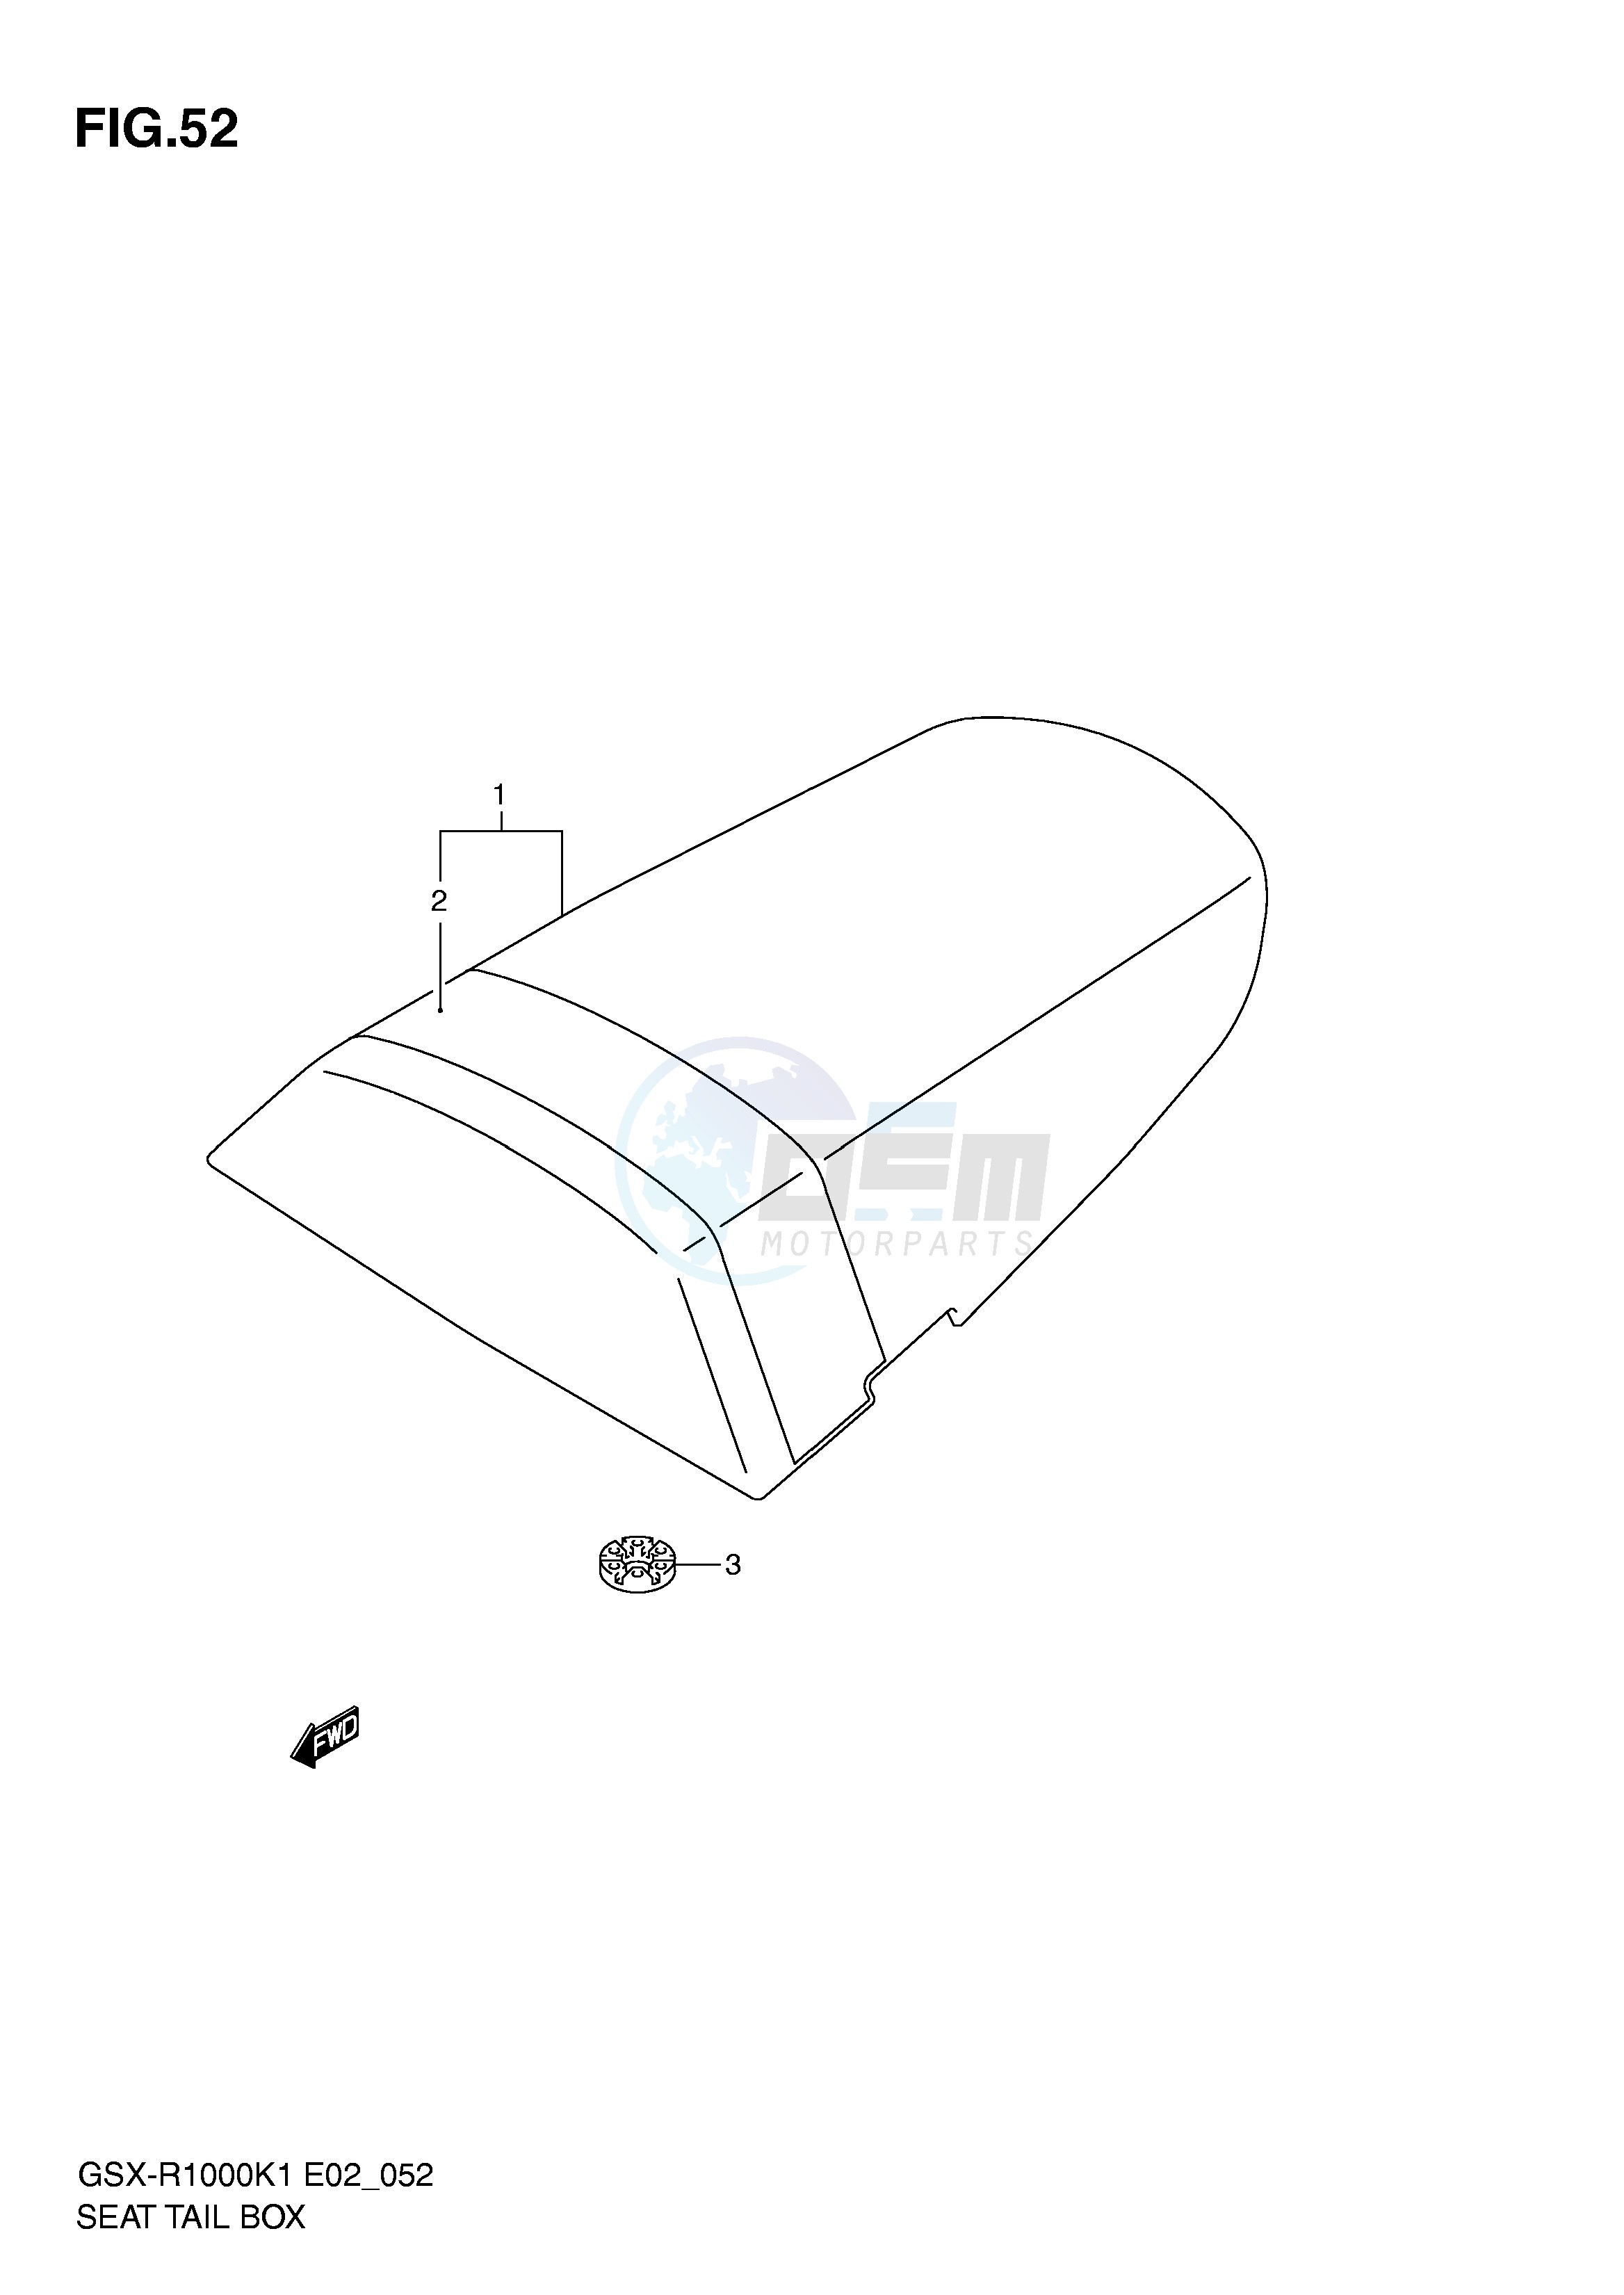 SEAT TAIL BOX (GSX-R1000K1) blueprint